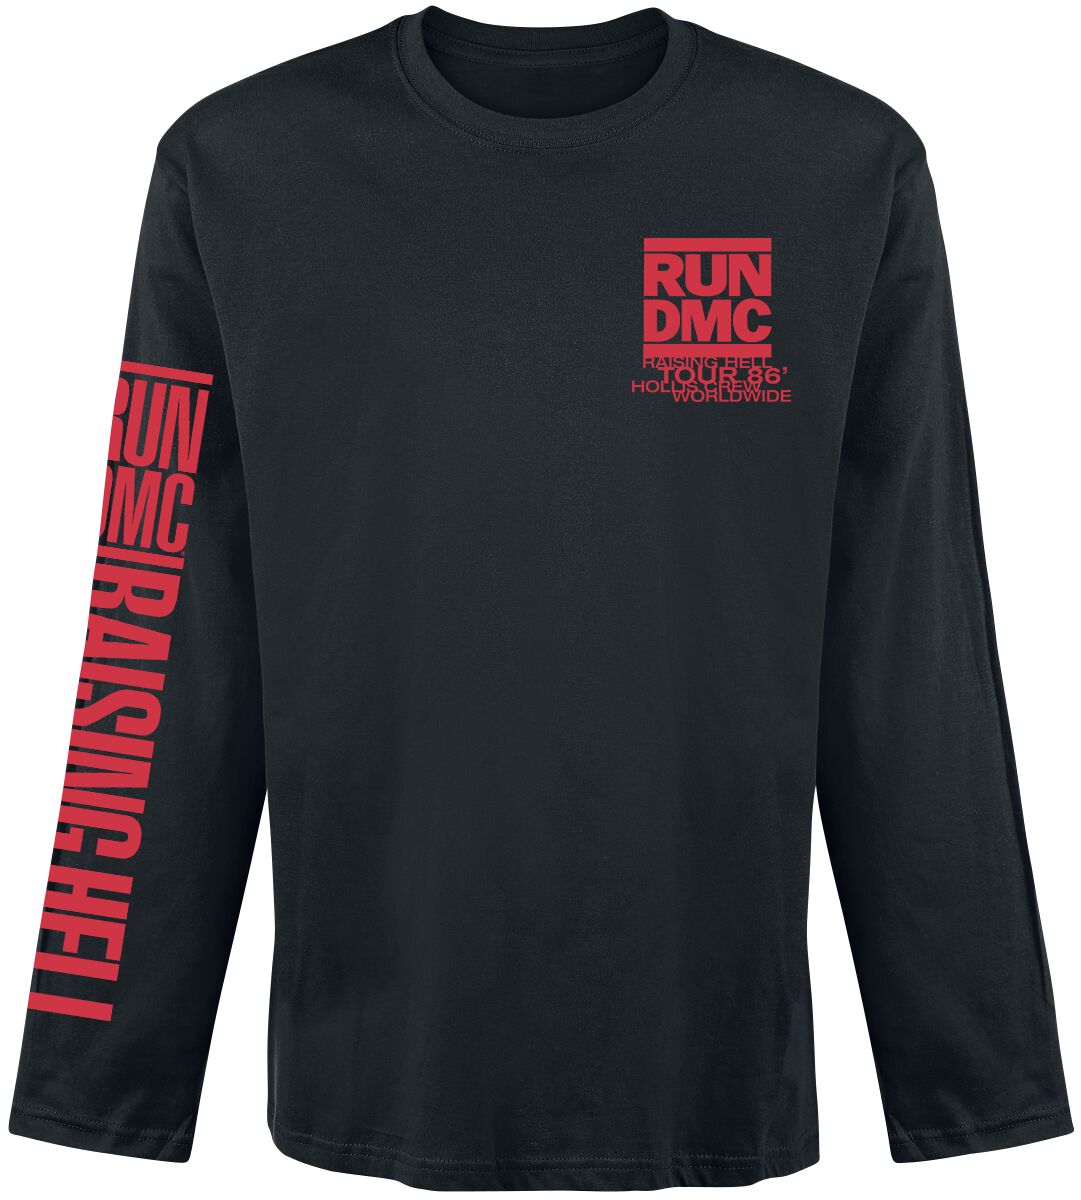 Run DMC Raising Hell Tour 86 Langarmshirt schwarz in XL